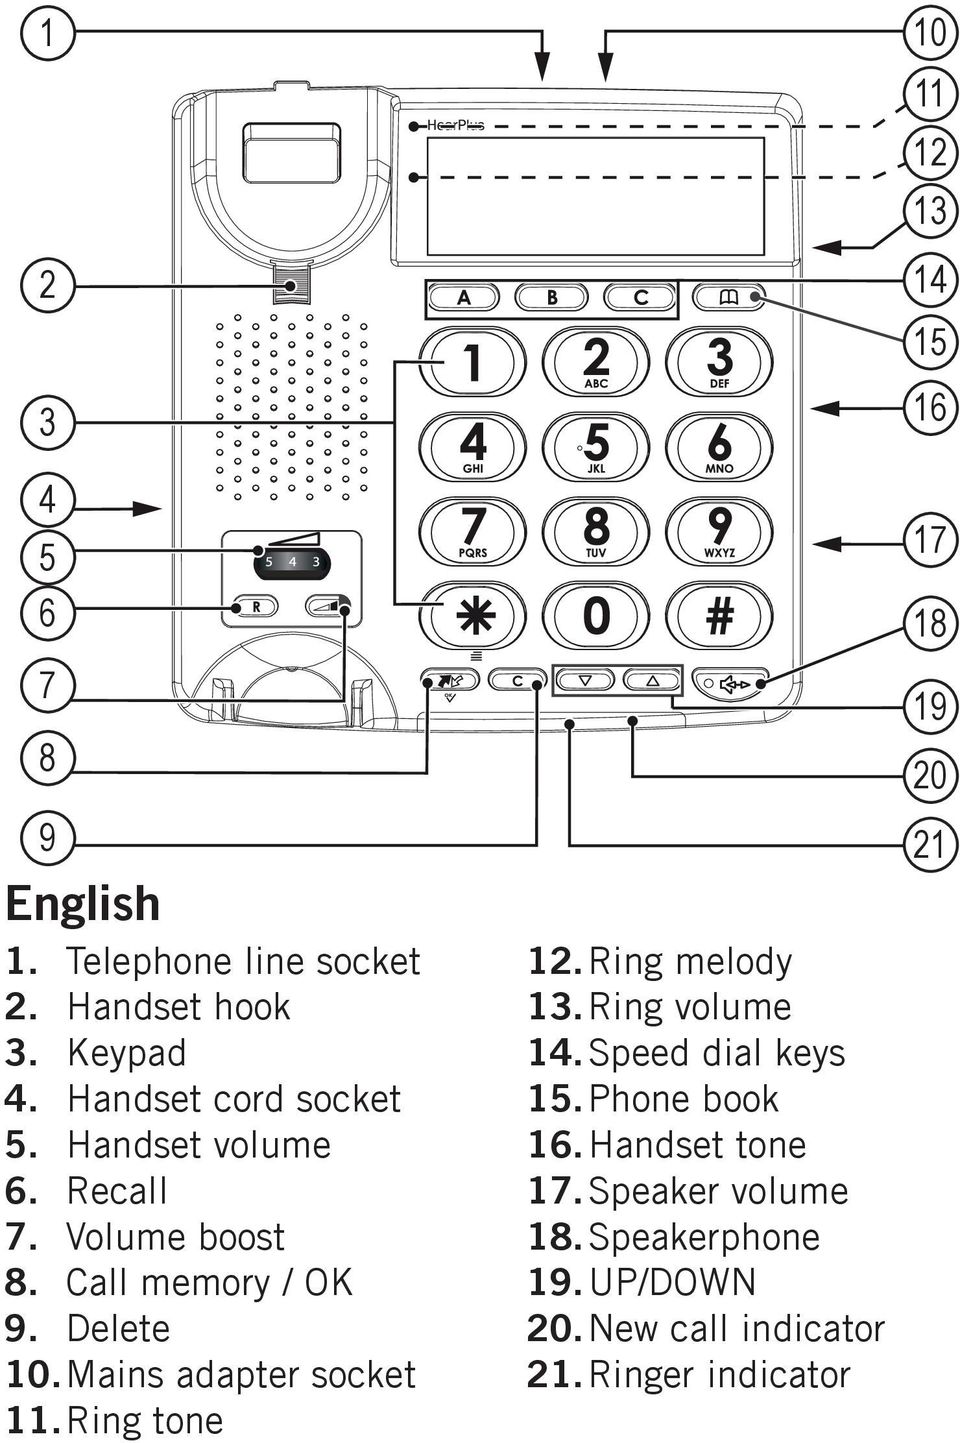 Ring tone 12. Ring melody 13. Ring volume 14. Speed dial keys 15. Phone book 16. Handset tone 17.